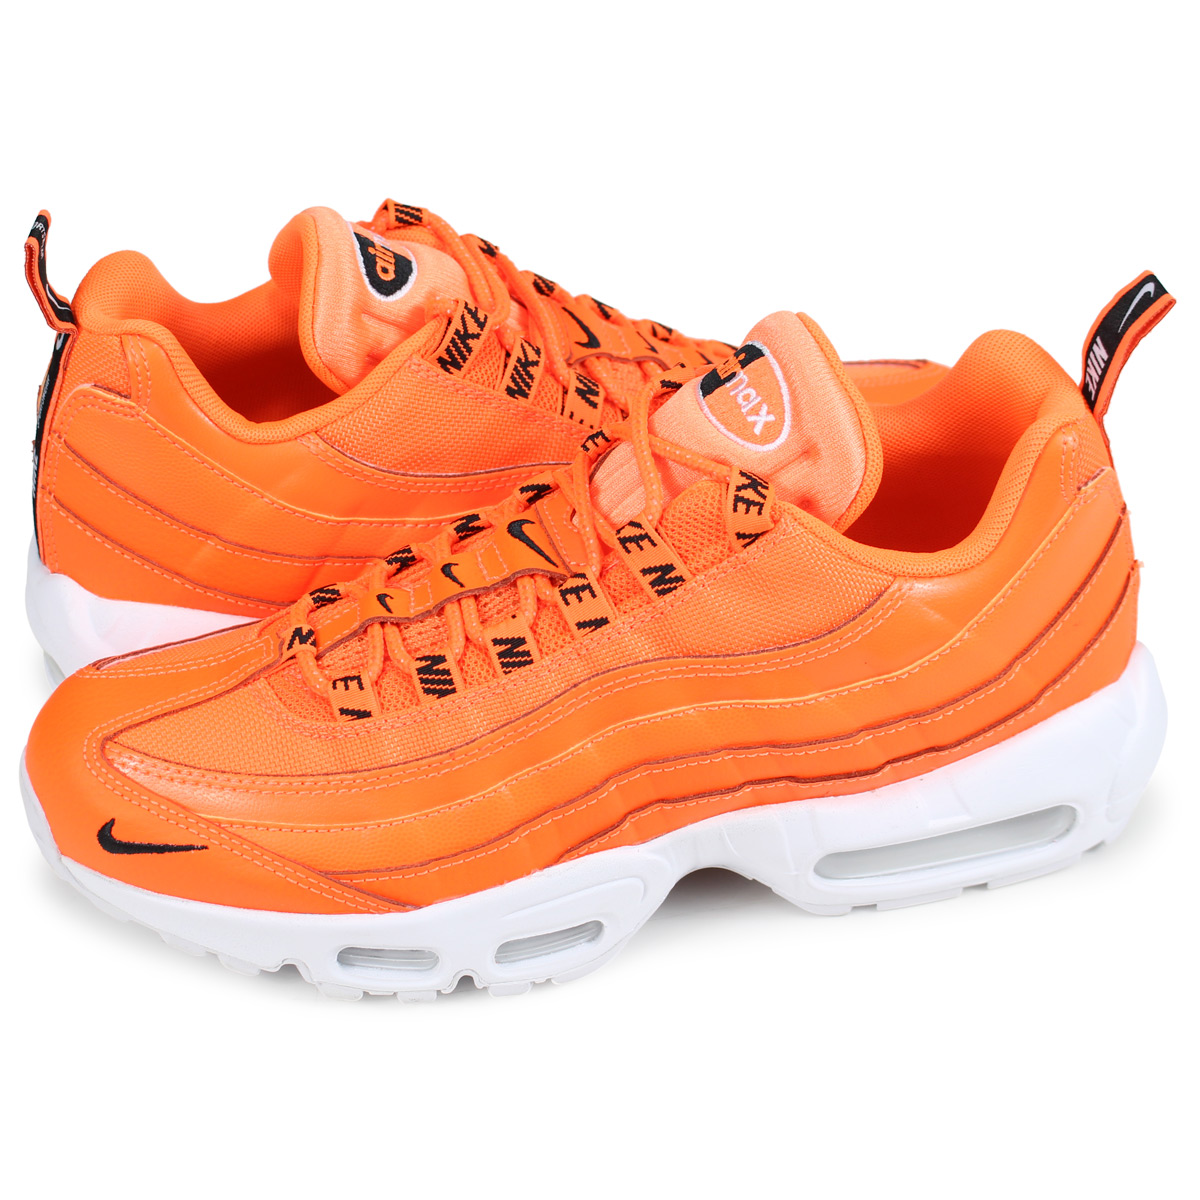 orange air max shoes